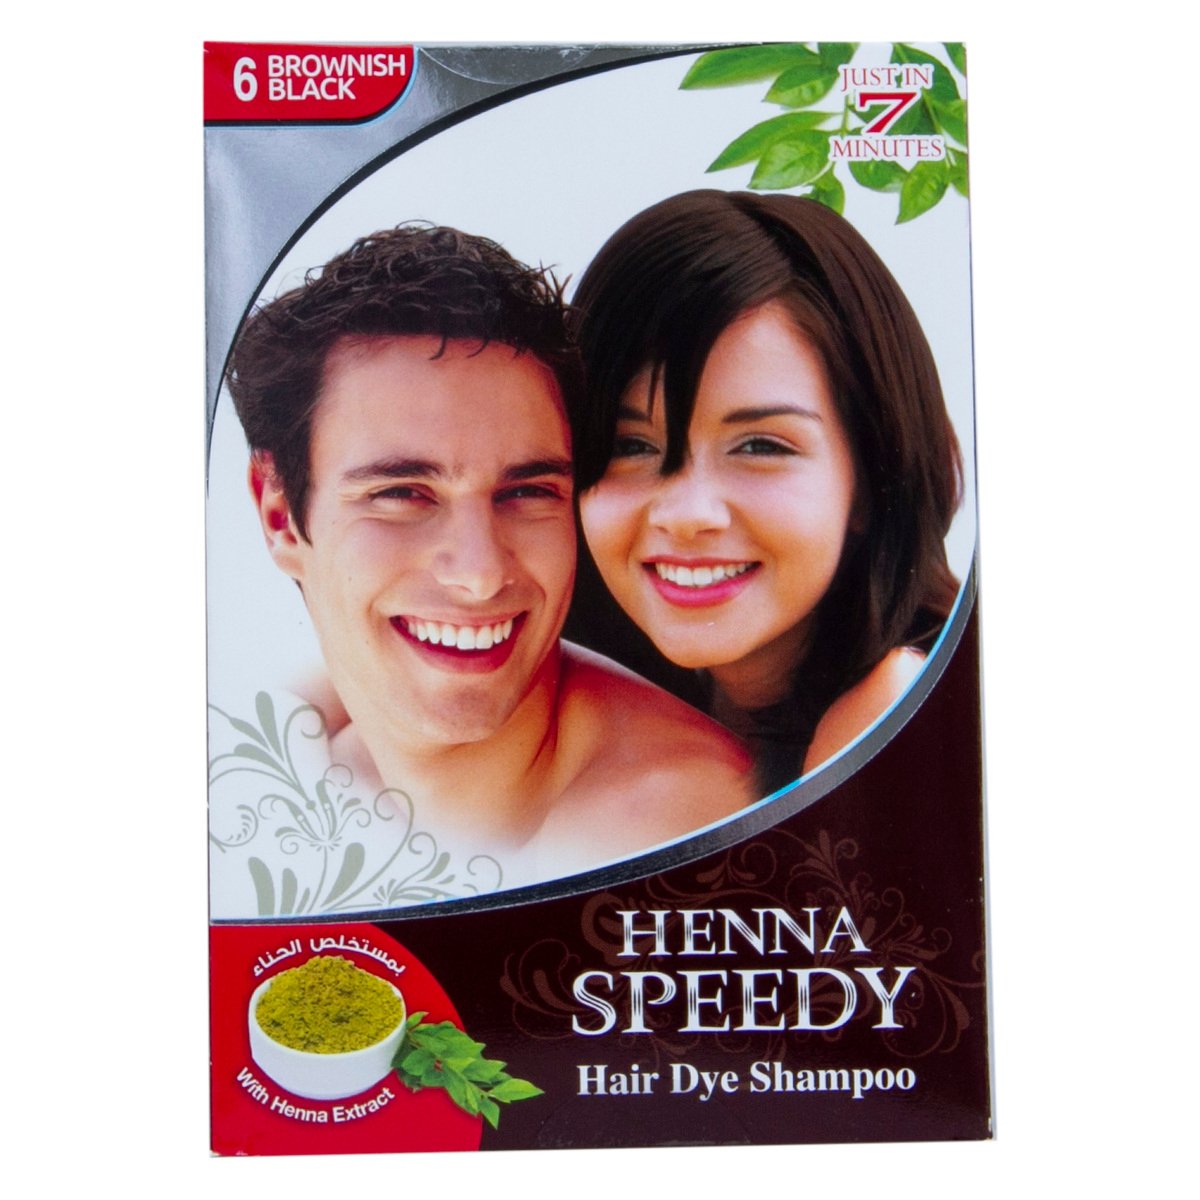 Hanna Speedy Brownish Black 6 Hair Dye Shampoo 30 ml